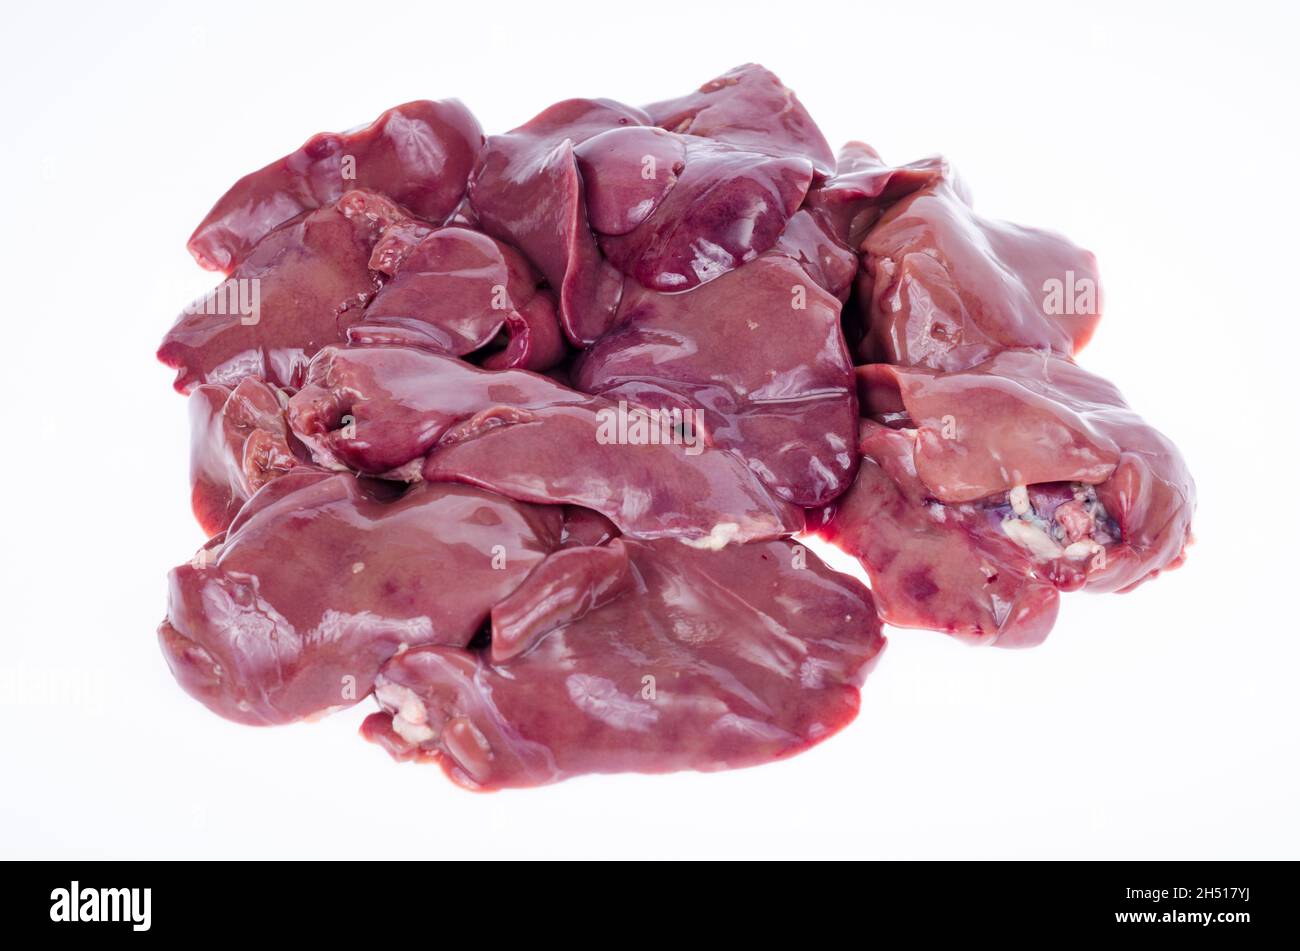 Offal, liver. Chicken liver on white background. Studio Photo Stock Photo